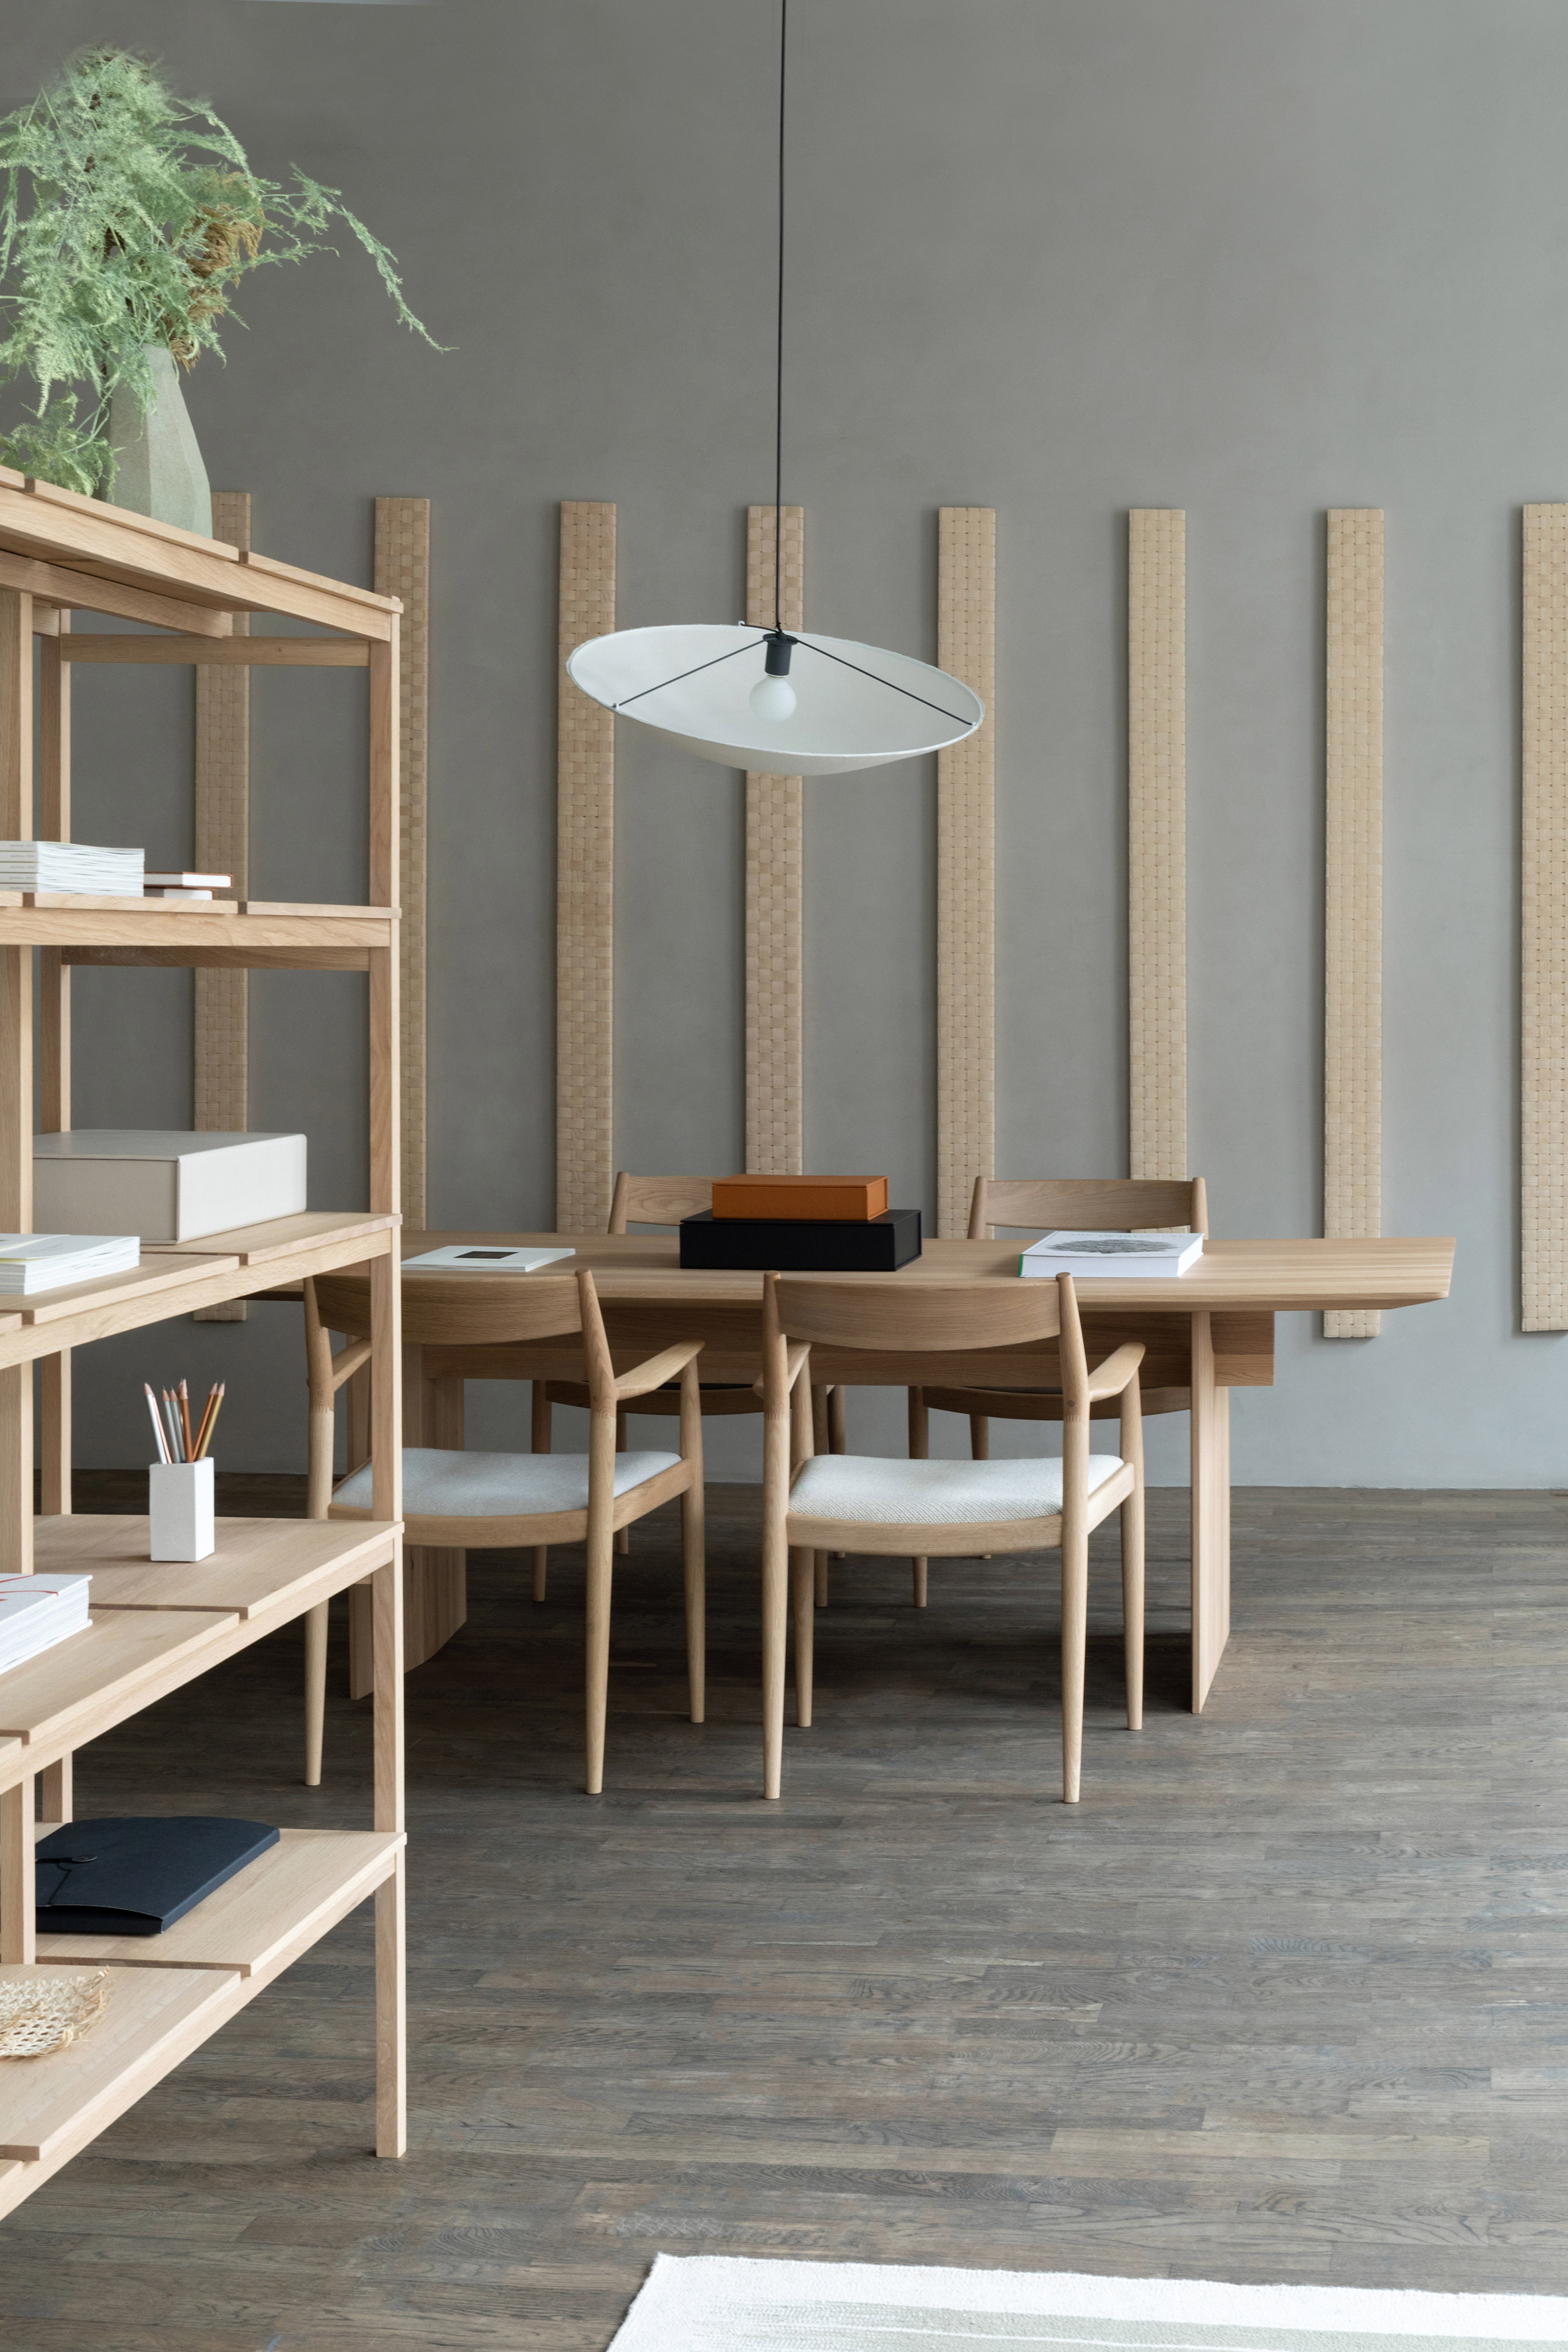 Karimoku Case Study furniture exhibition at Kinfolk Gallery, Copenhagen